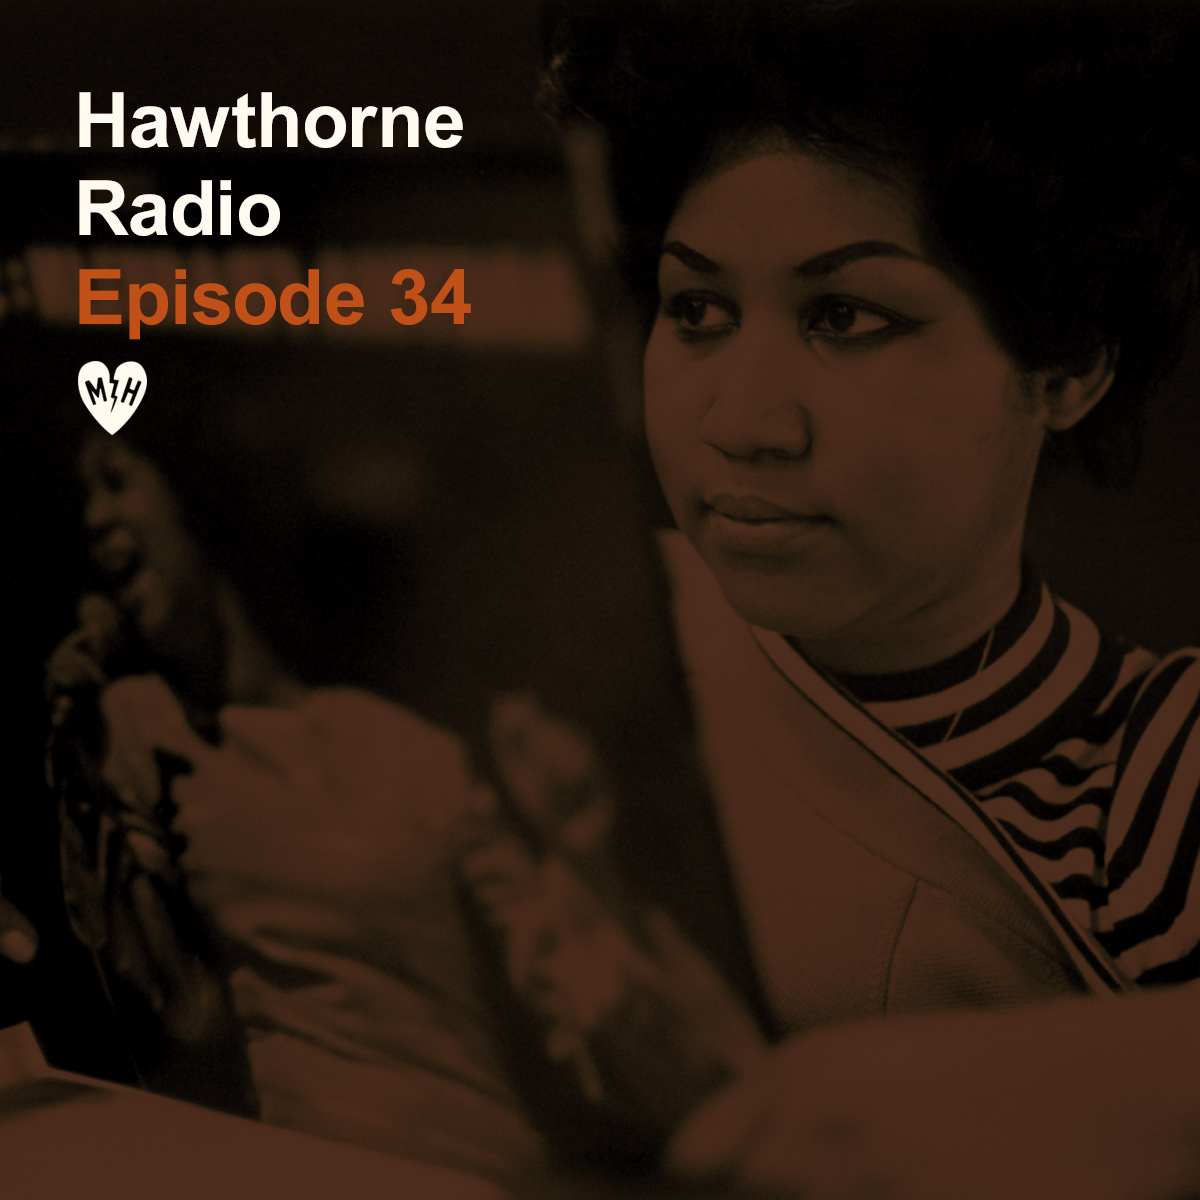 Hawthorne Radio Episode 34 Mayer Hawthorne Official Site 3700